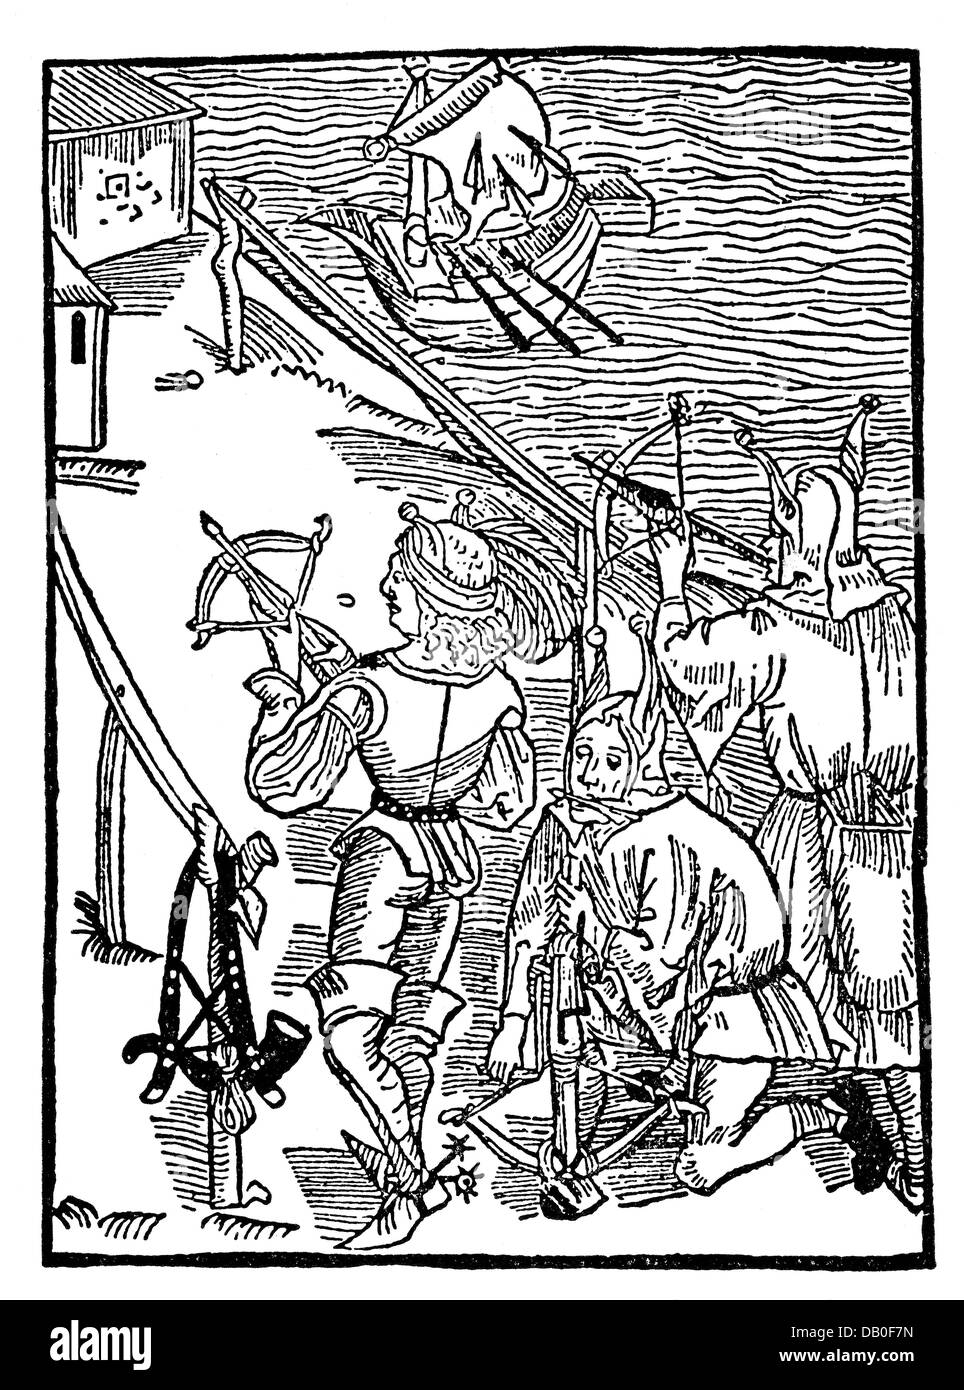 Sport, Armbrust-Schießen, Narren-Schießen mit der Armbrust, Holzschnitt, 'Ship of Fools' von Sebastian Brent, 1494, Additional-Rights-Clearences-not available Stockfoto